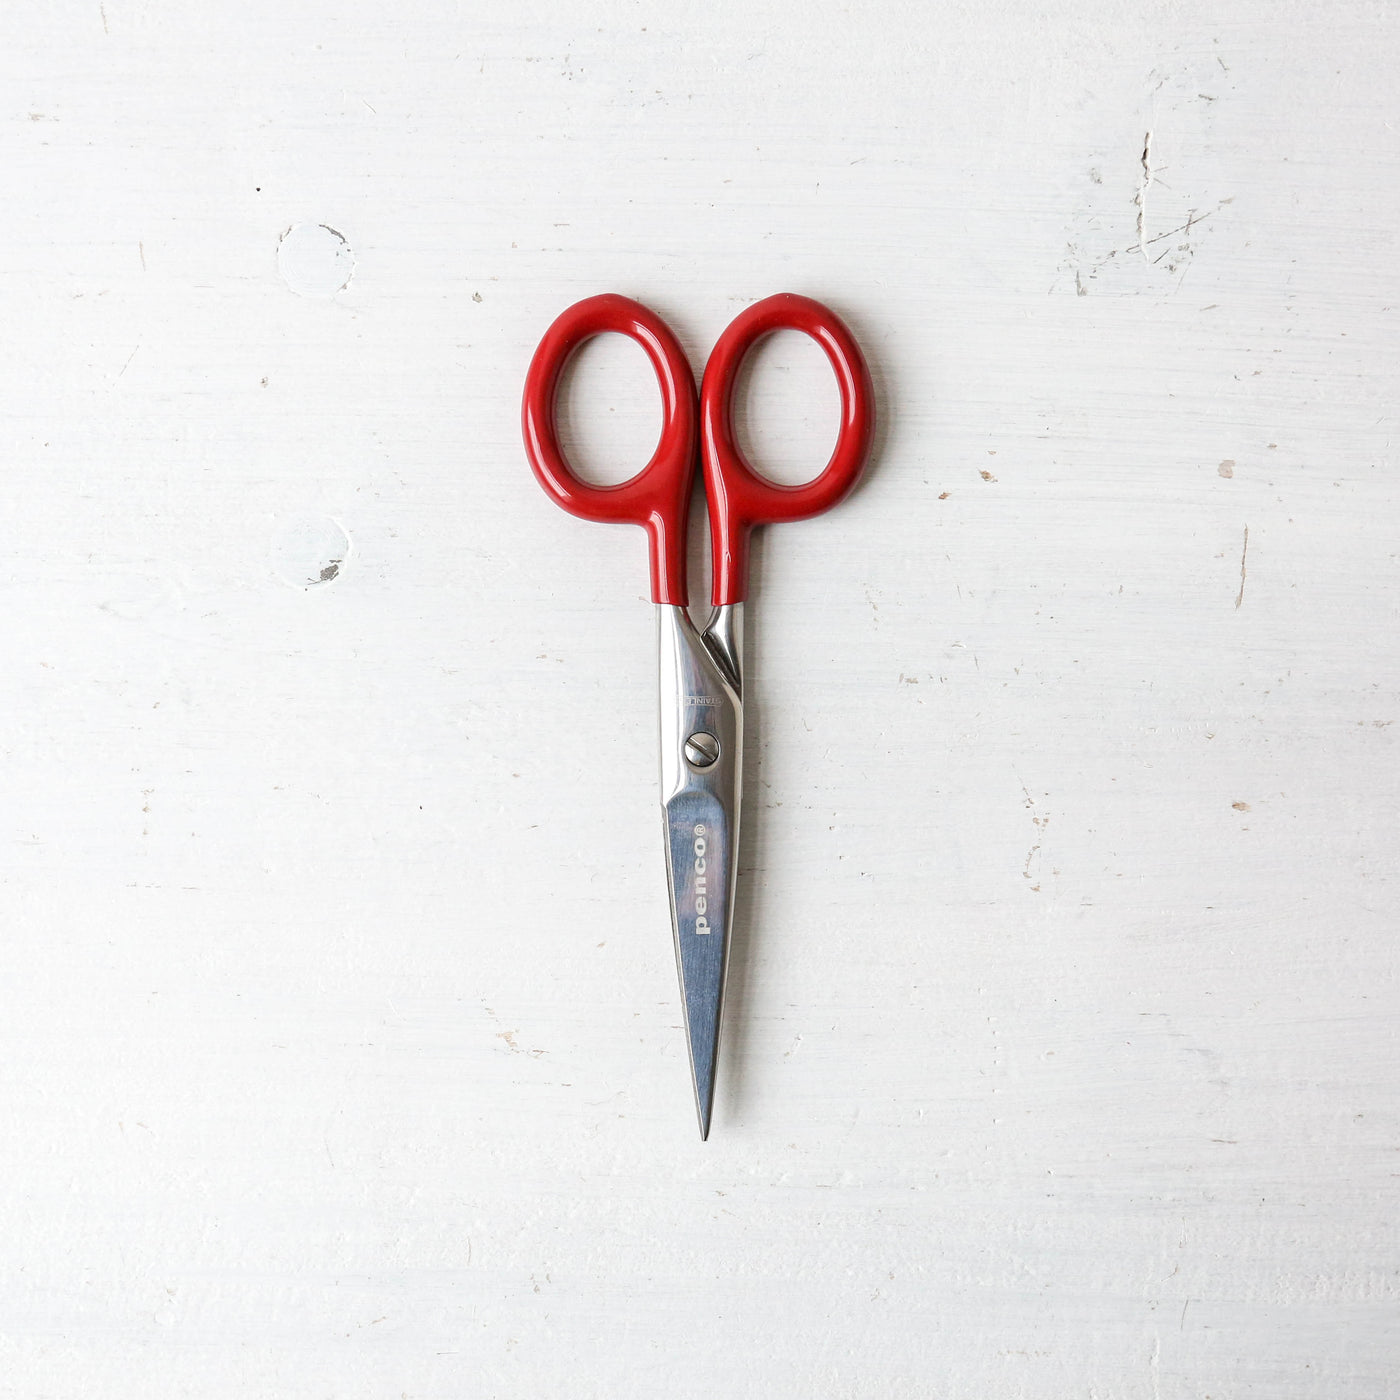 Hightide Penco Stainless Scissors - Small